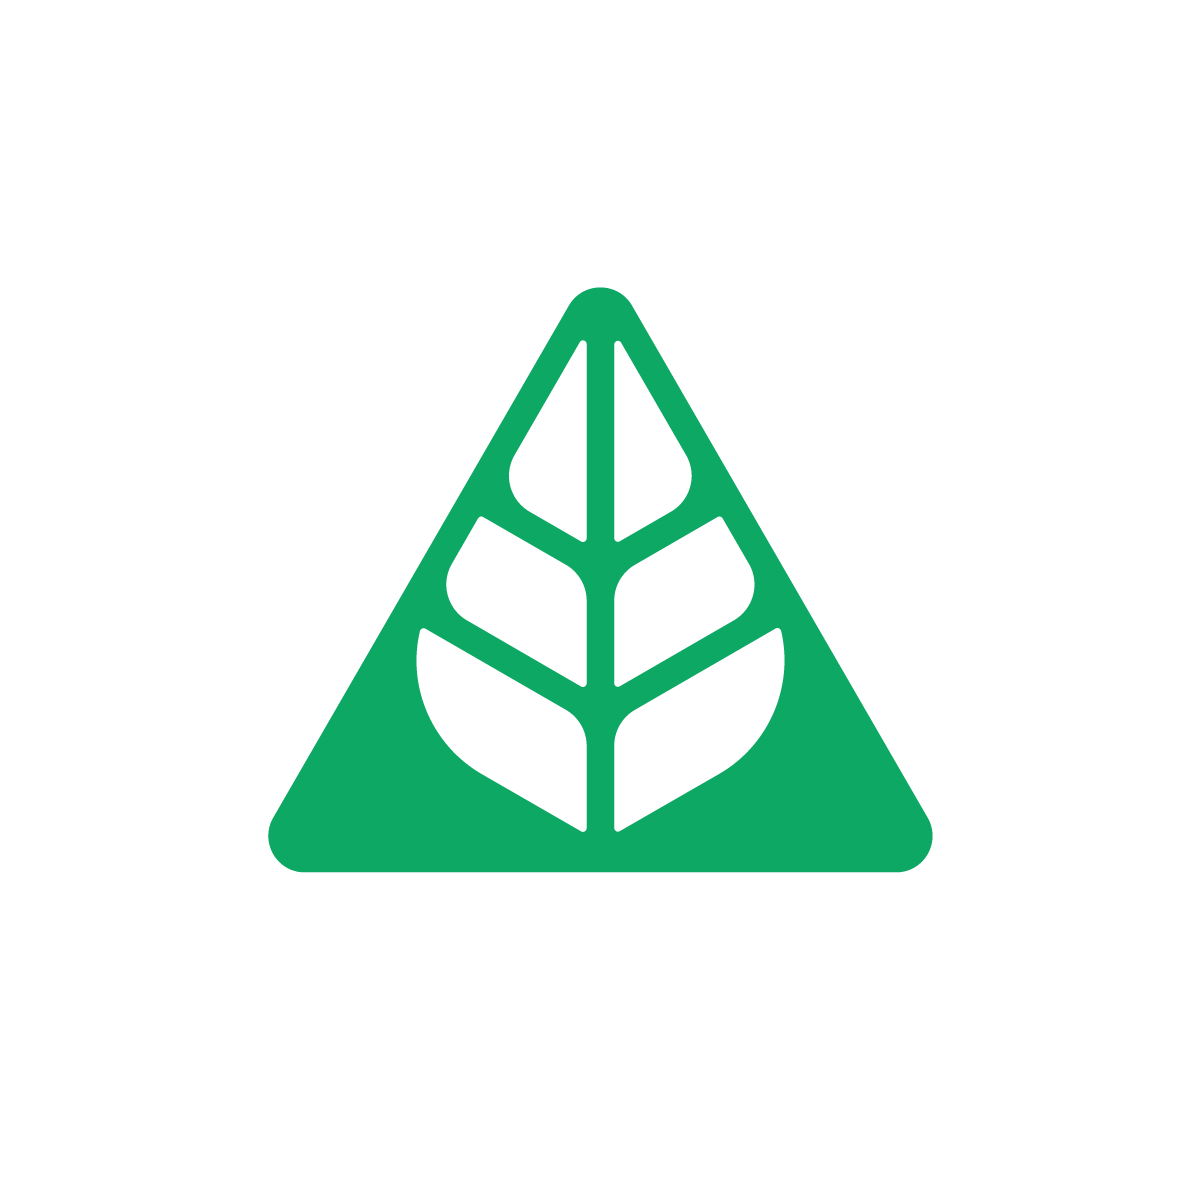 Leaf Triangle Logo: Triangle shape with image of leaf cut into it.